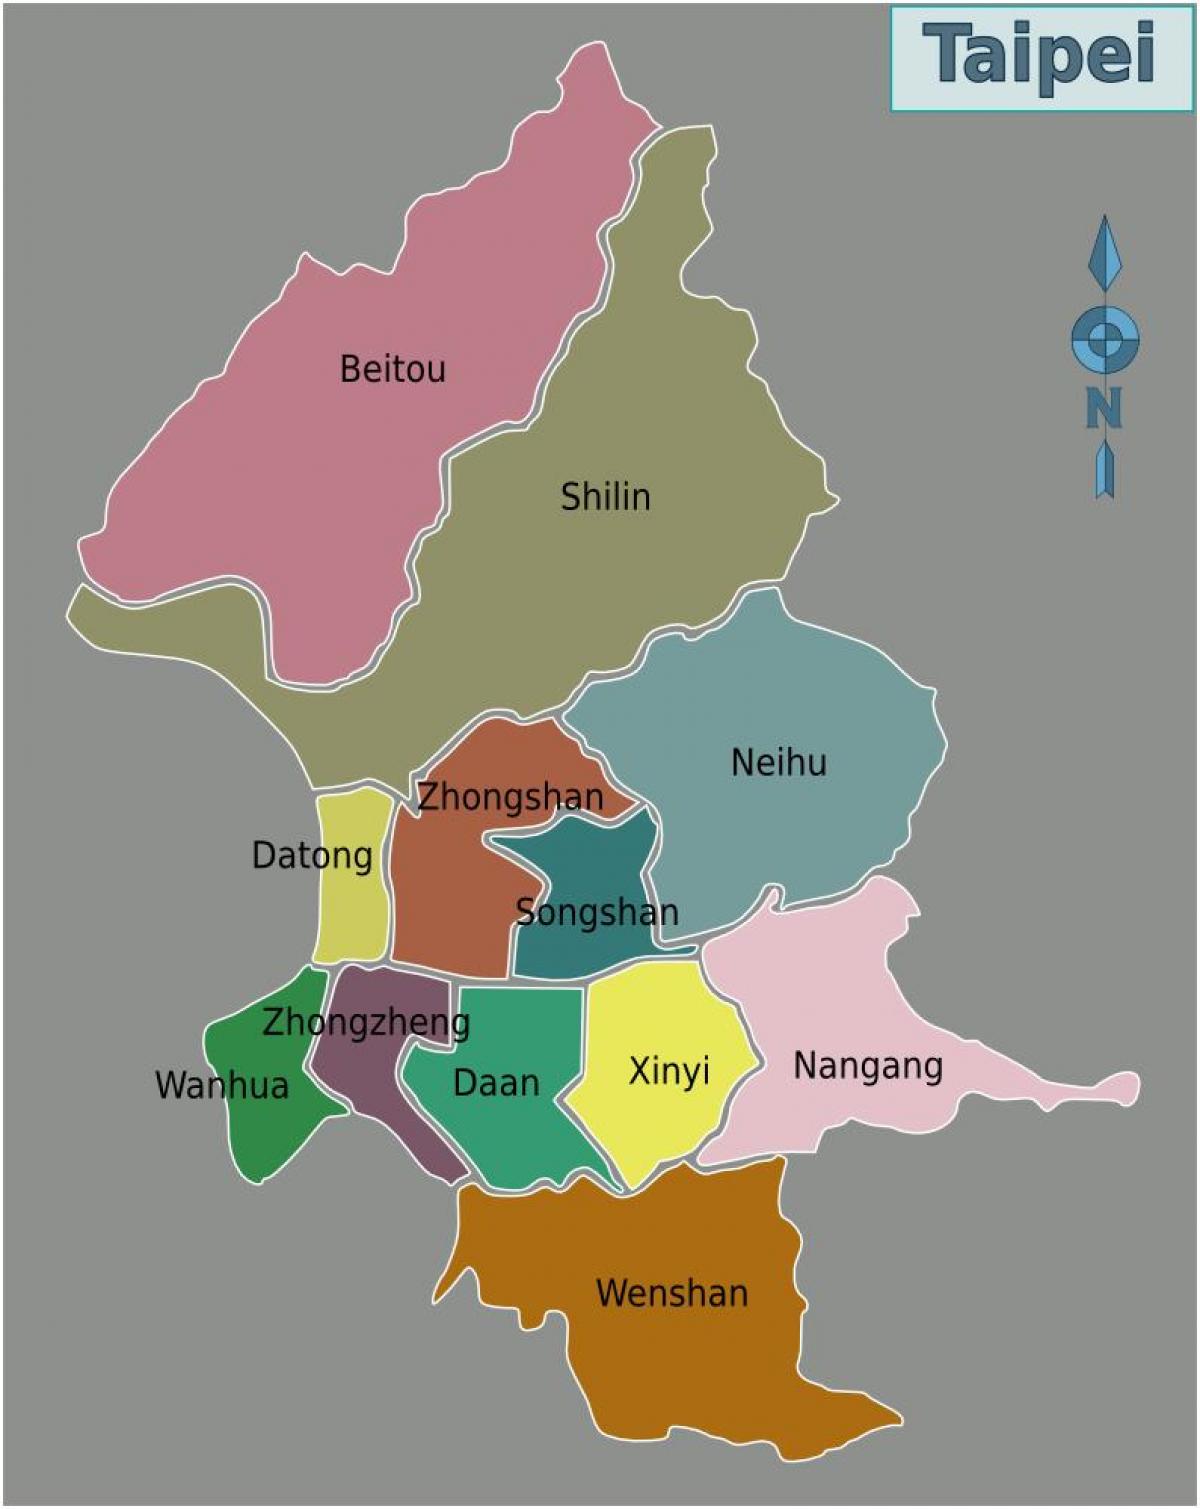 Taipei city distretto mappa